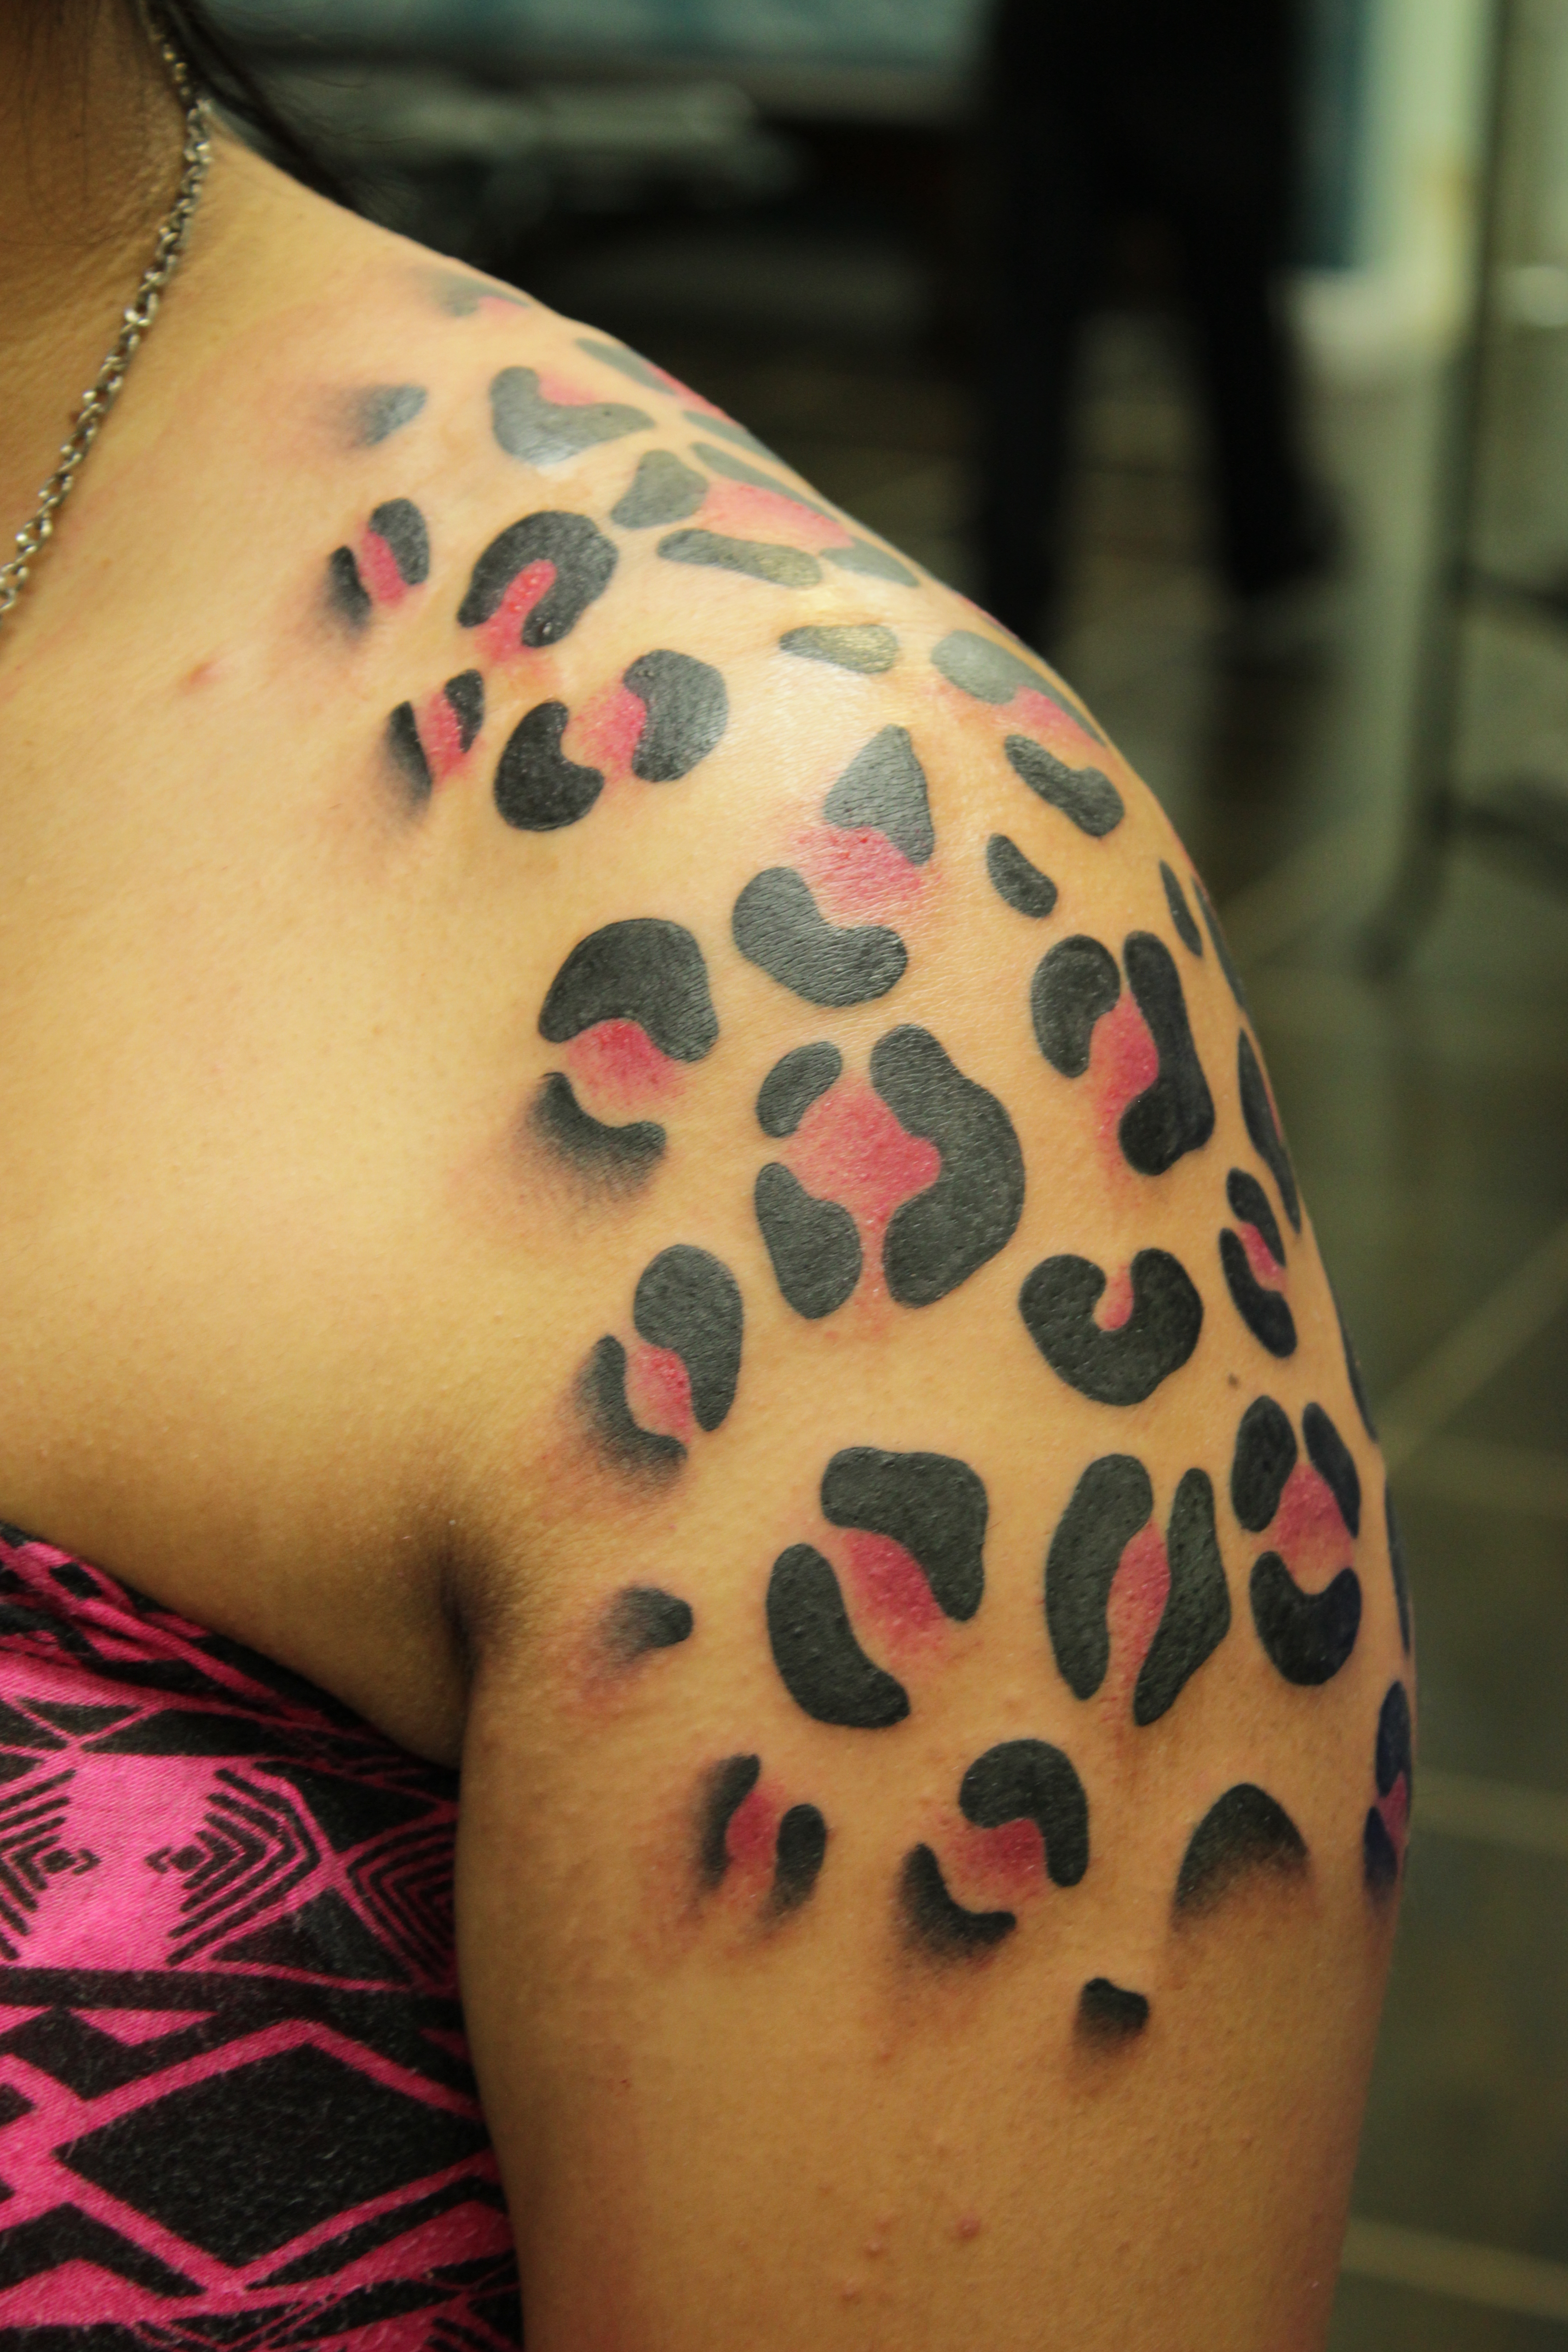 Tattoos of Cheetah Print.